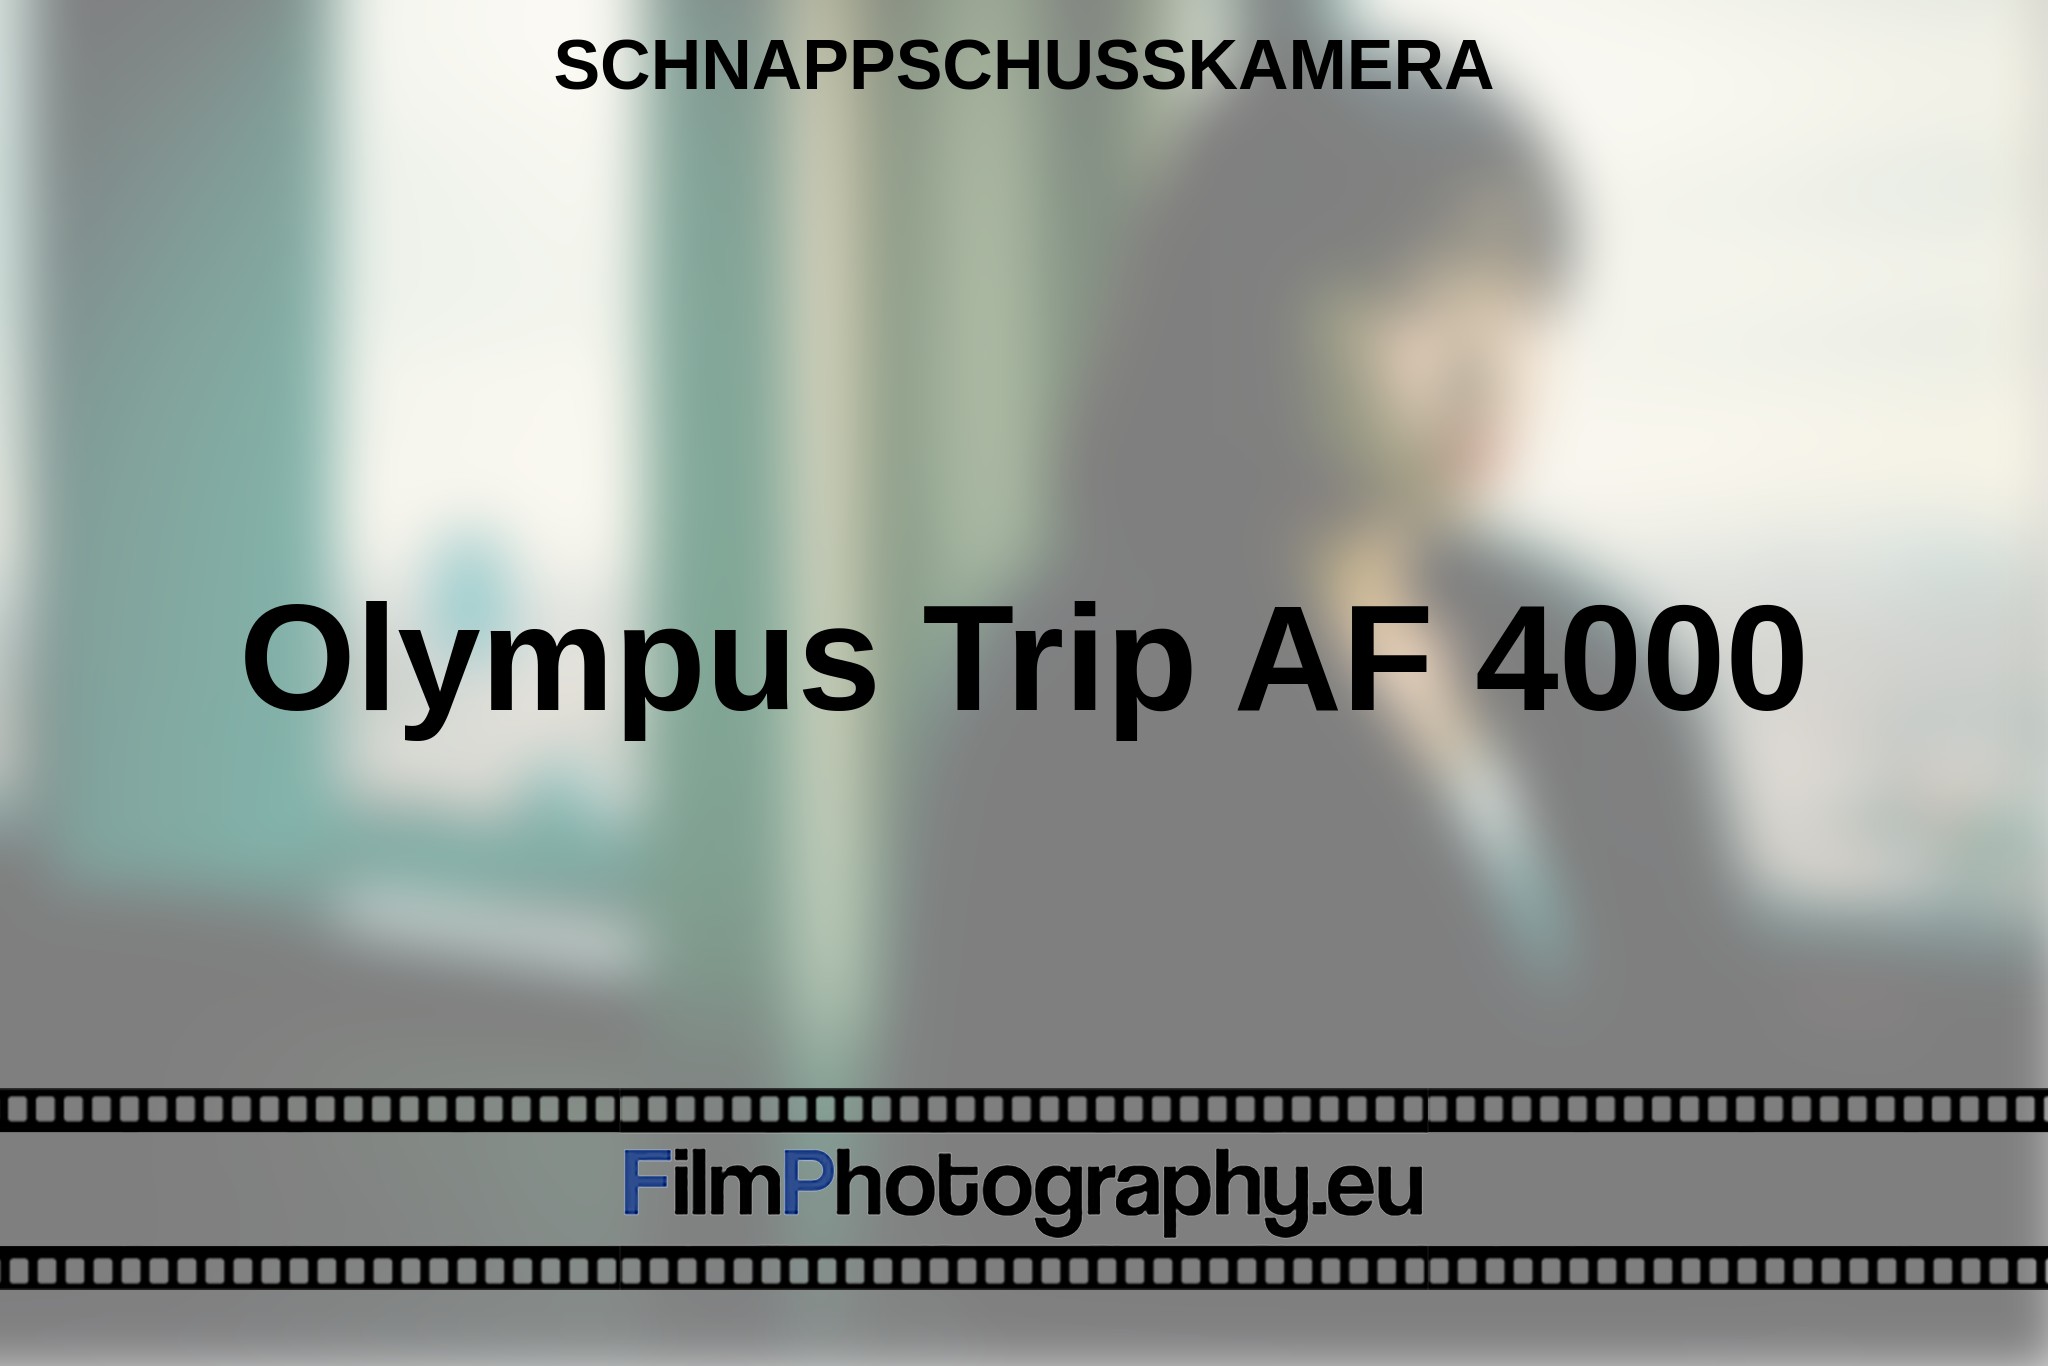 olympus-trip-af-4000-schnappschusskamera-bnv.jpg